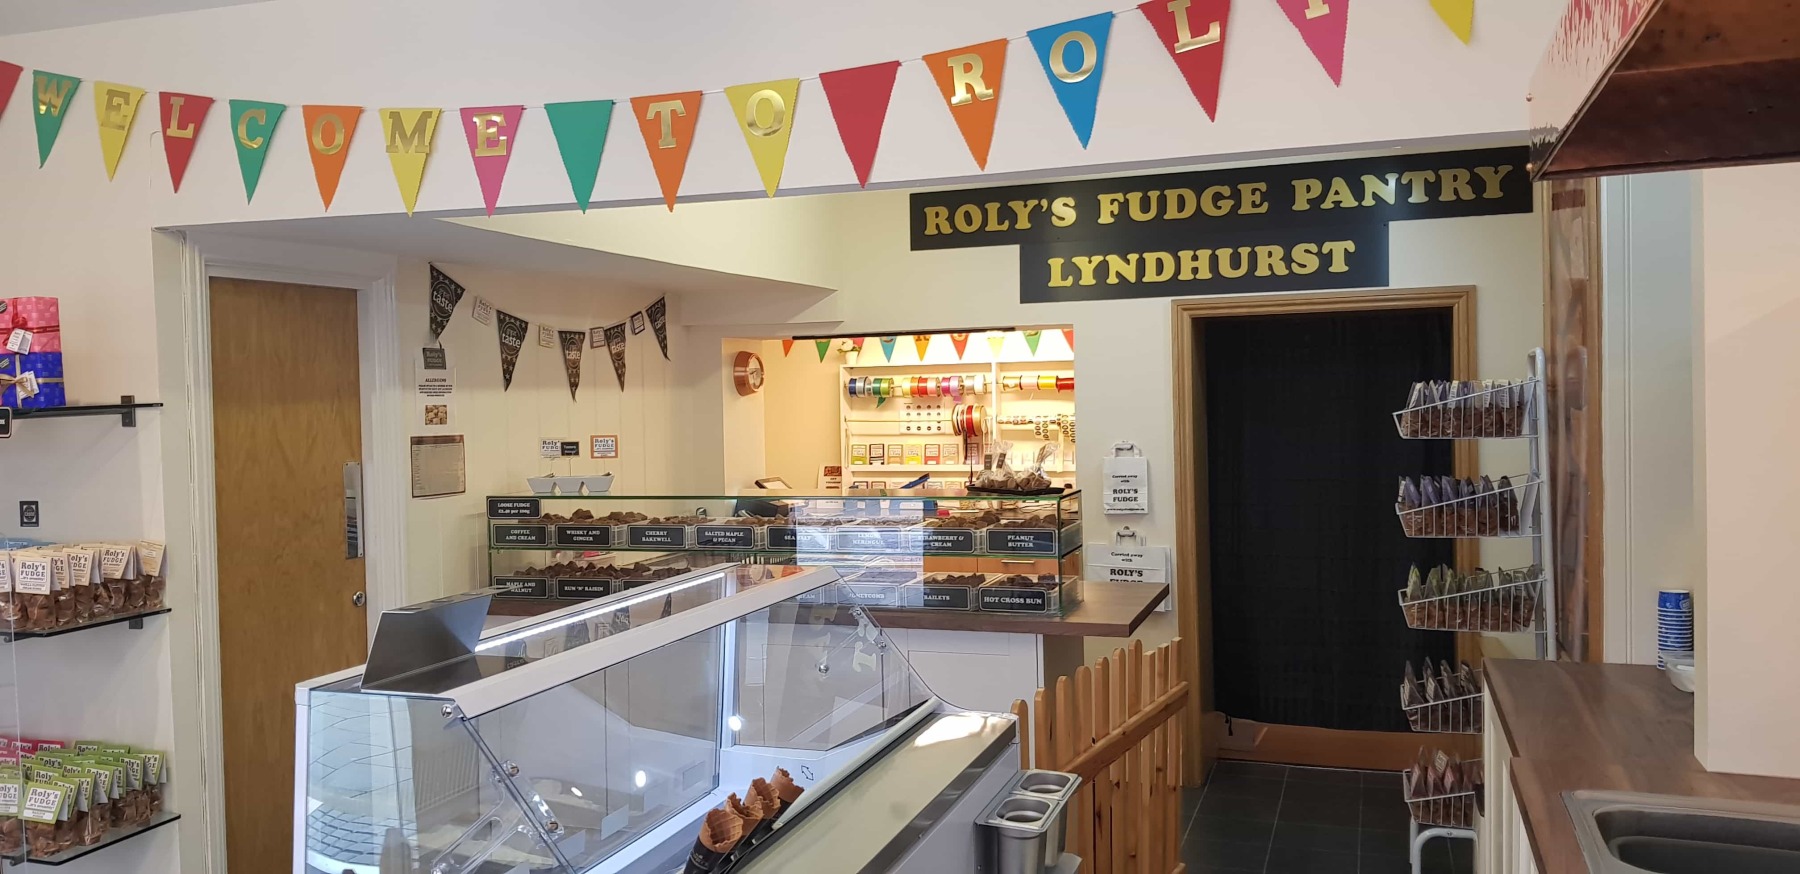 Roly's Fudge Lyndhurst